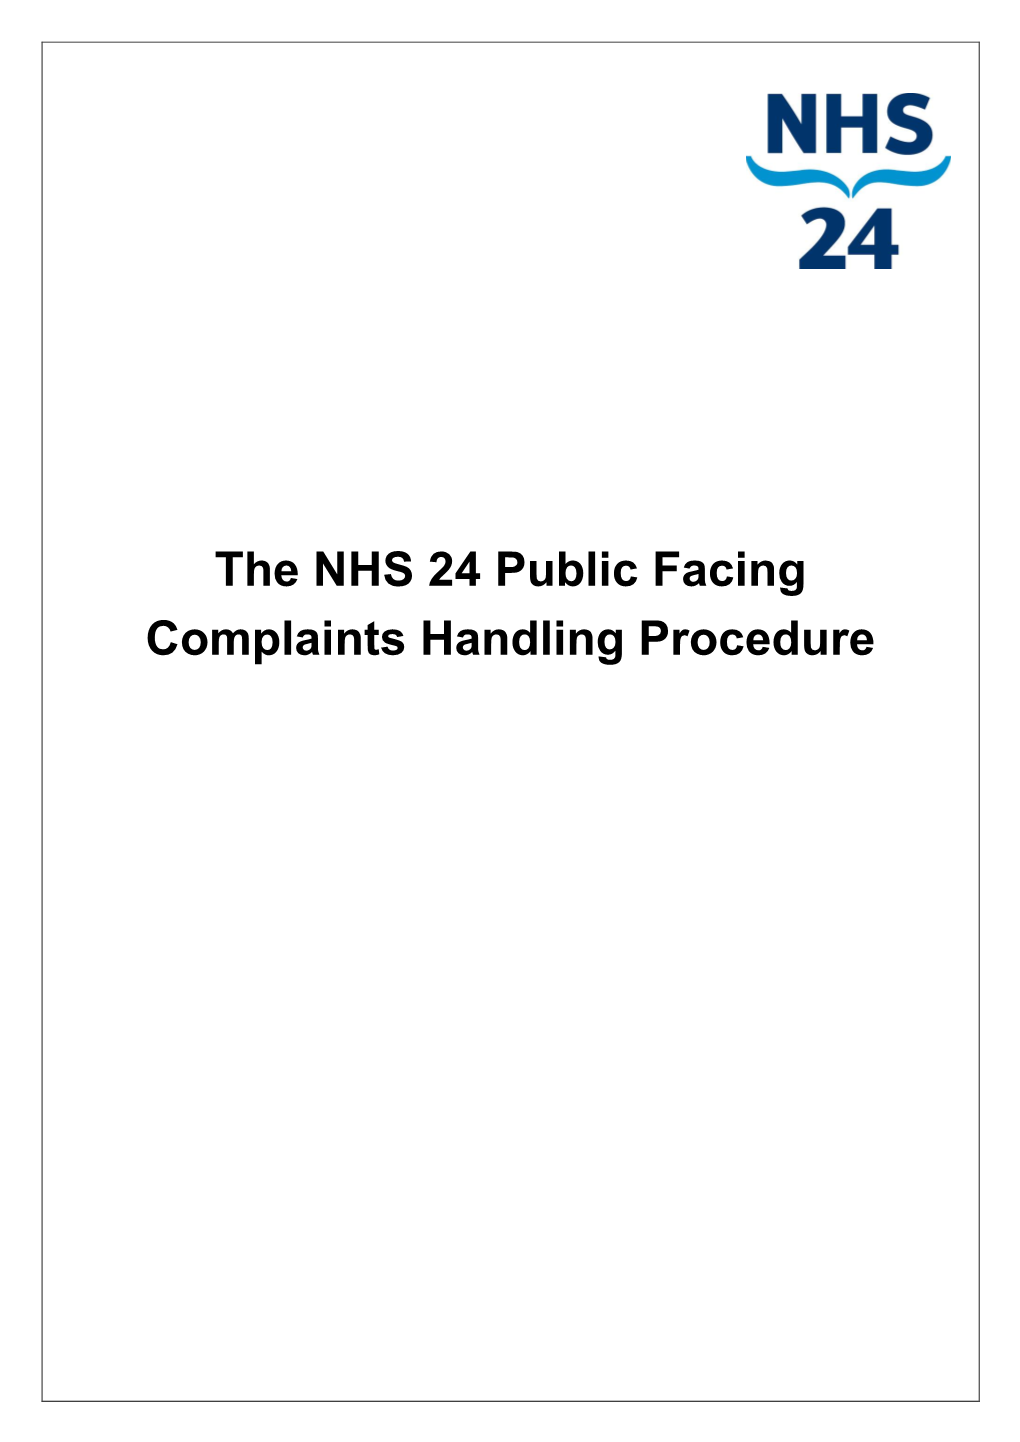 NHS 24 Public-Facing Complaints Handling Procedure